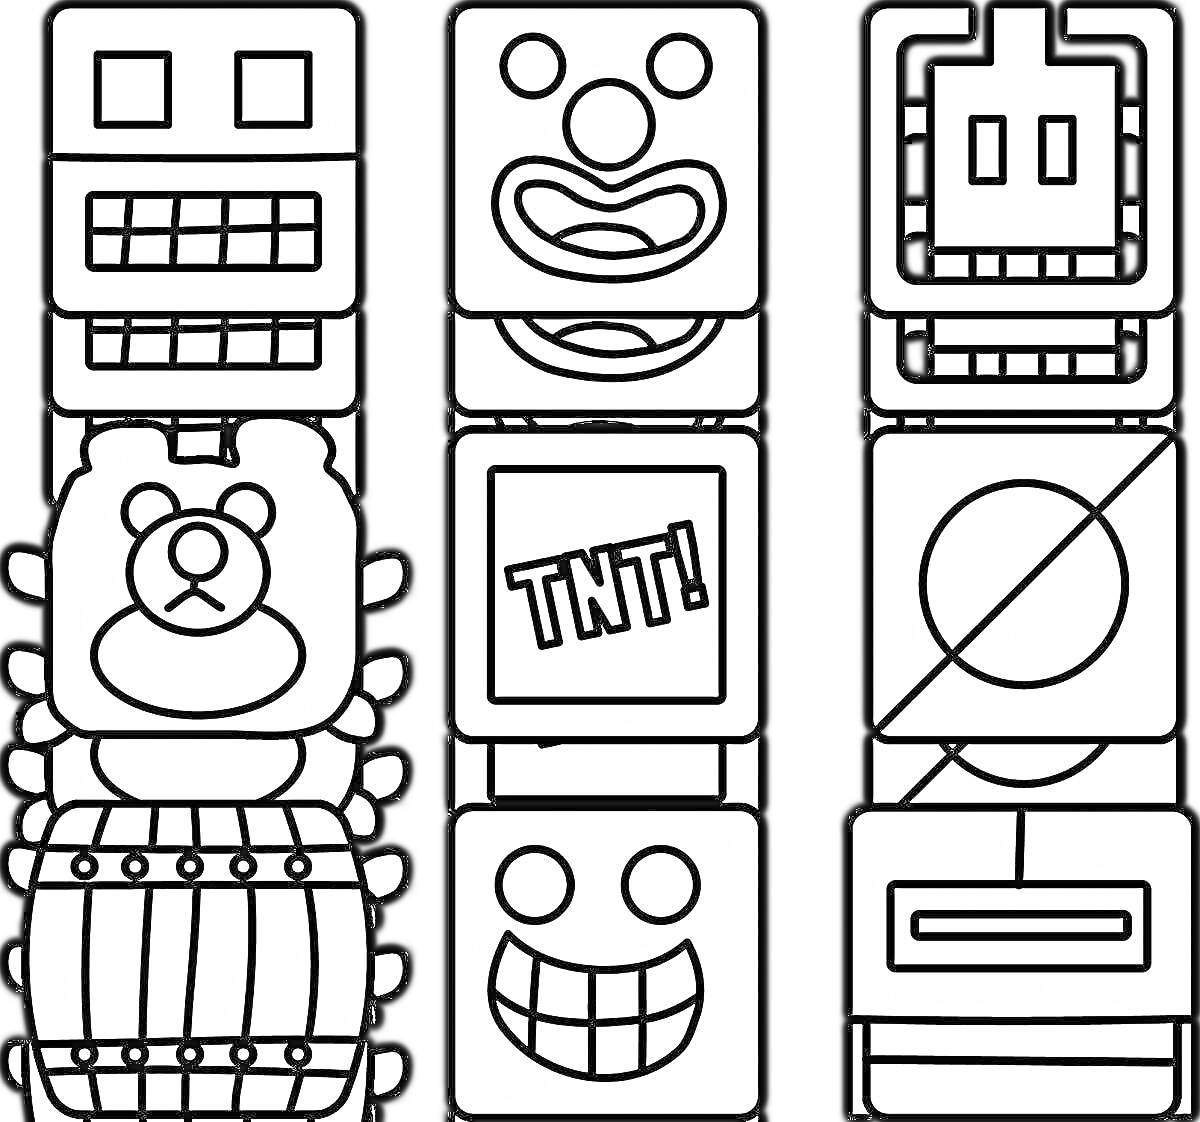 На раскраске изображено: Робот, Клоун, Медведь, Бочка, Куб, Линии